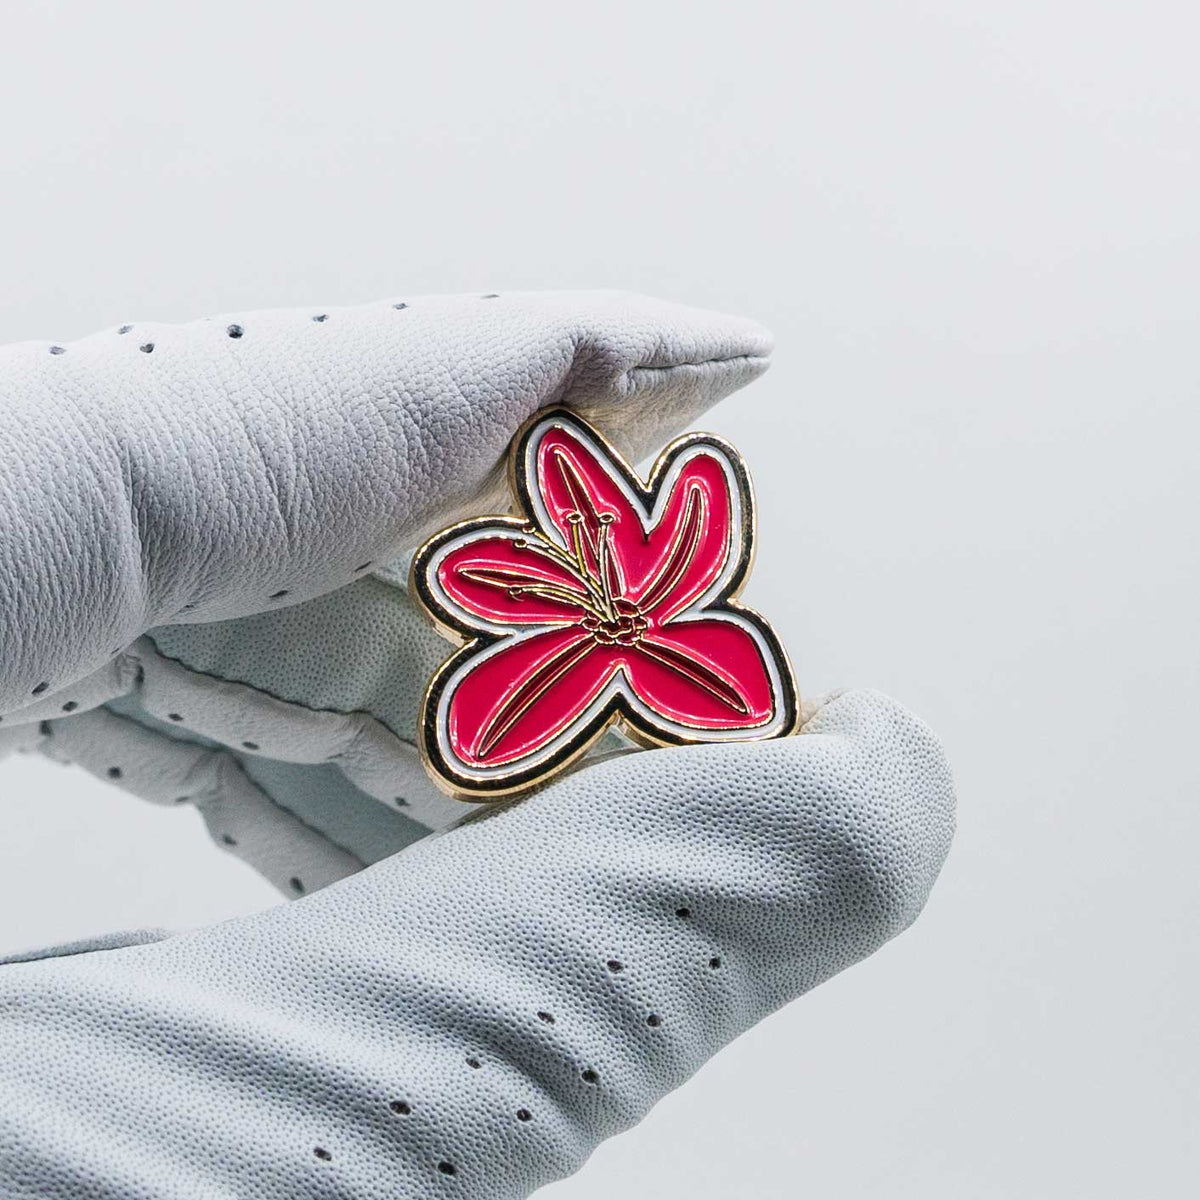 Masters Azalea Flower Golf Ball Marker in golf glove